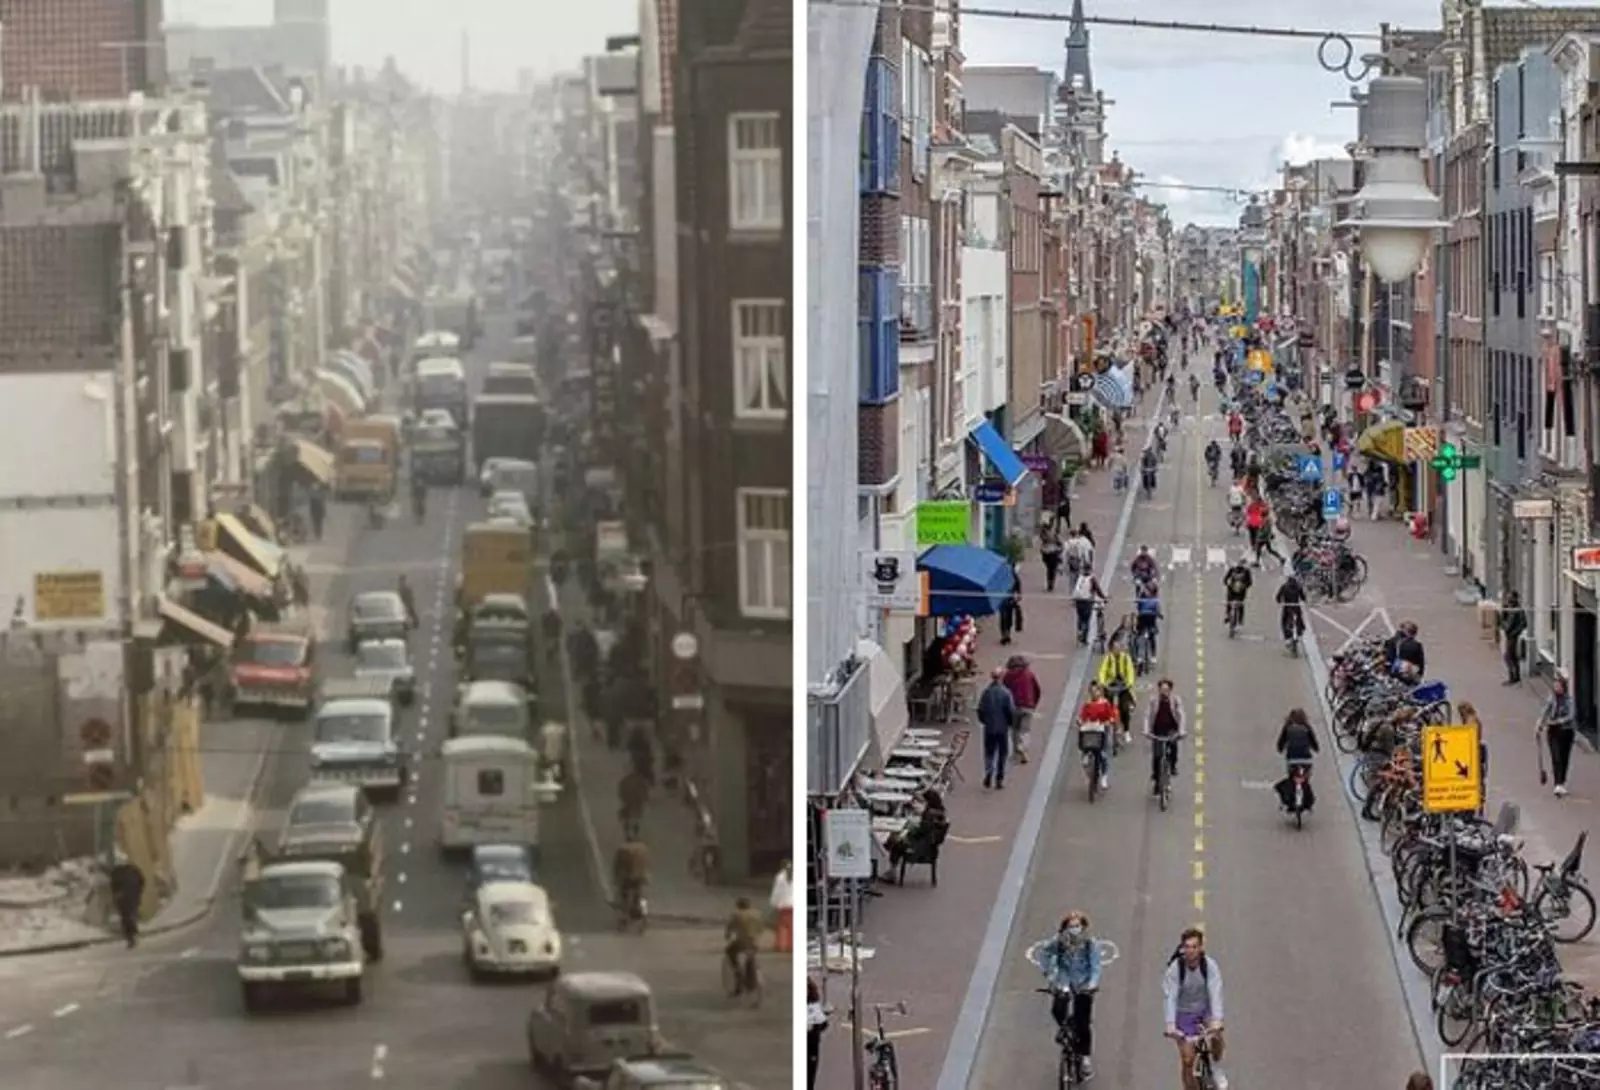 Улица Харлеммердейк в Амстердаме, Нидерланды (1971 и 2020 годы).